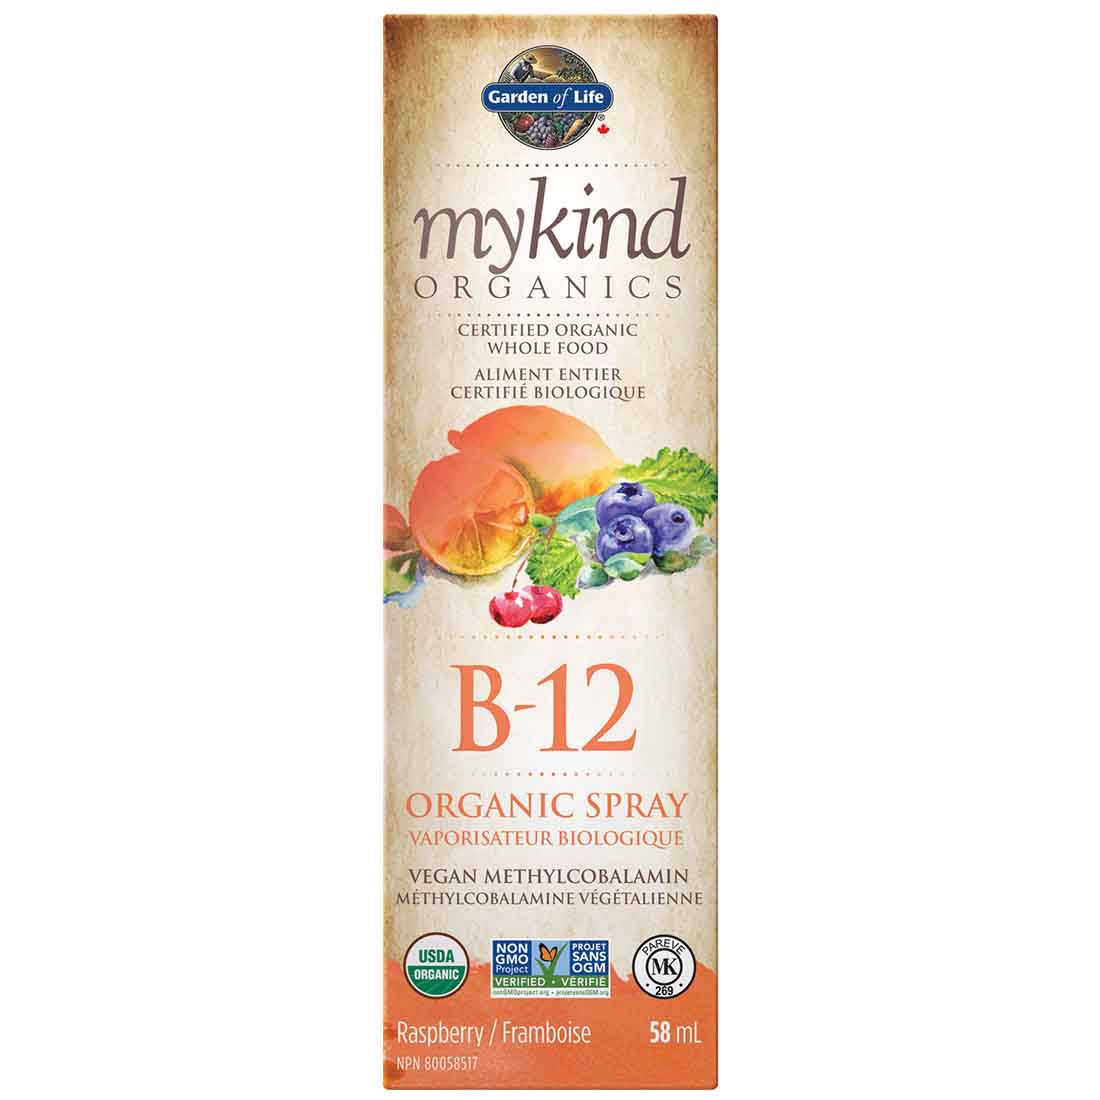 Garden of Life mykind Organics Vitamin B12 Organic Throat Spray Raspberry, 58ml